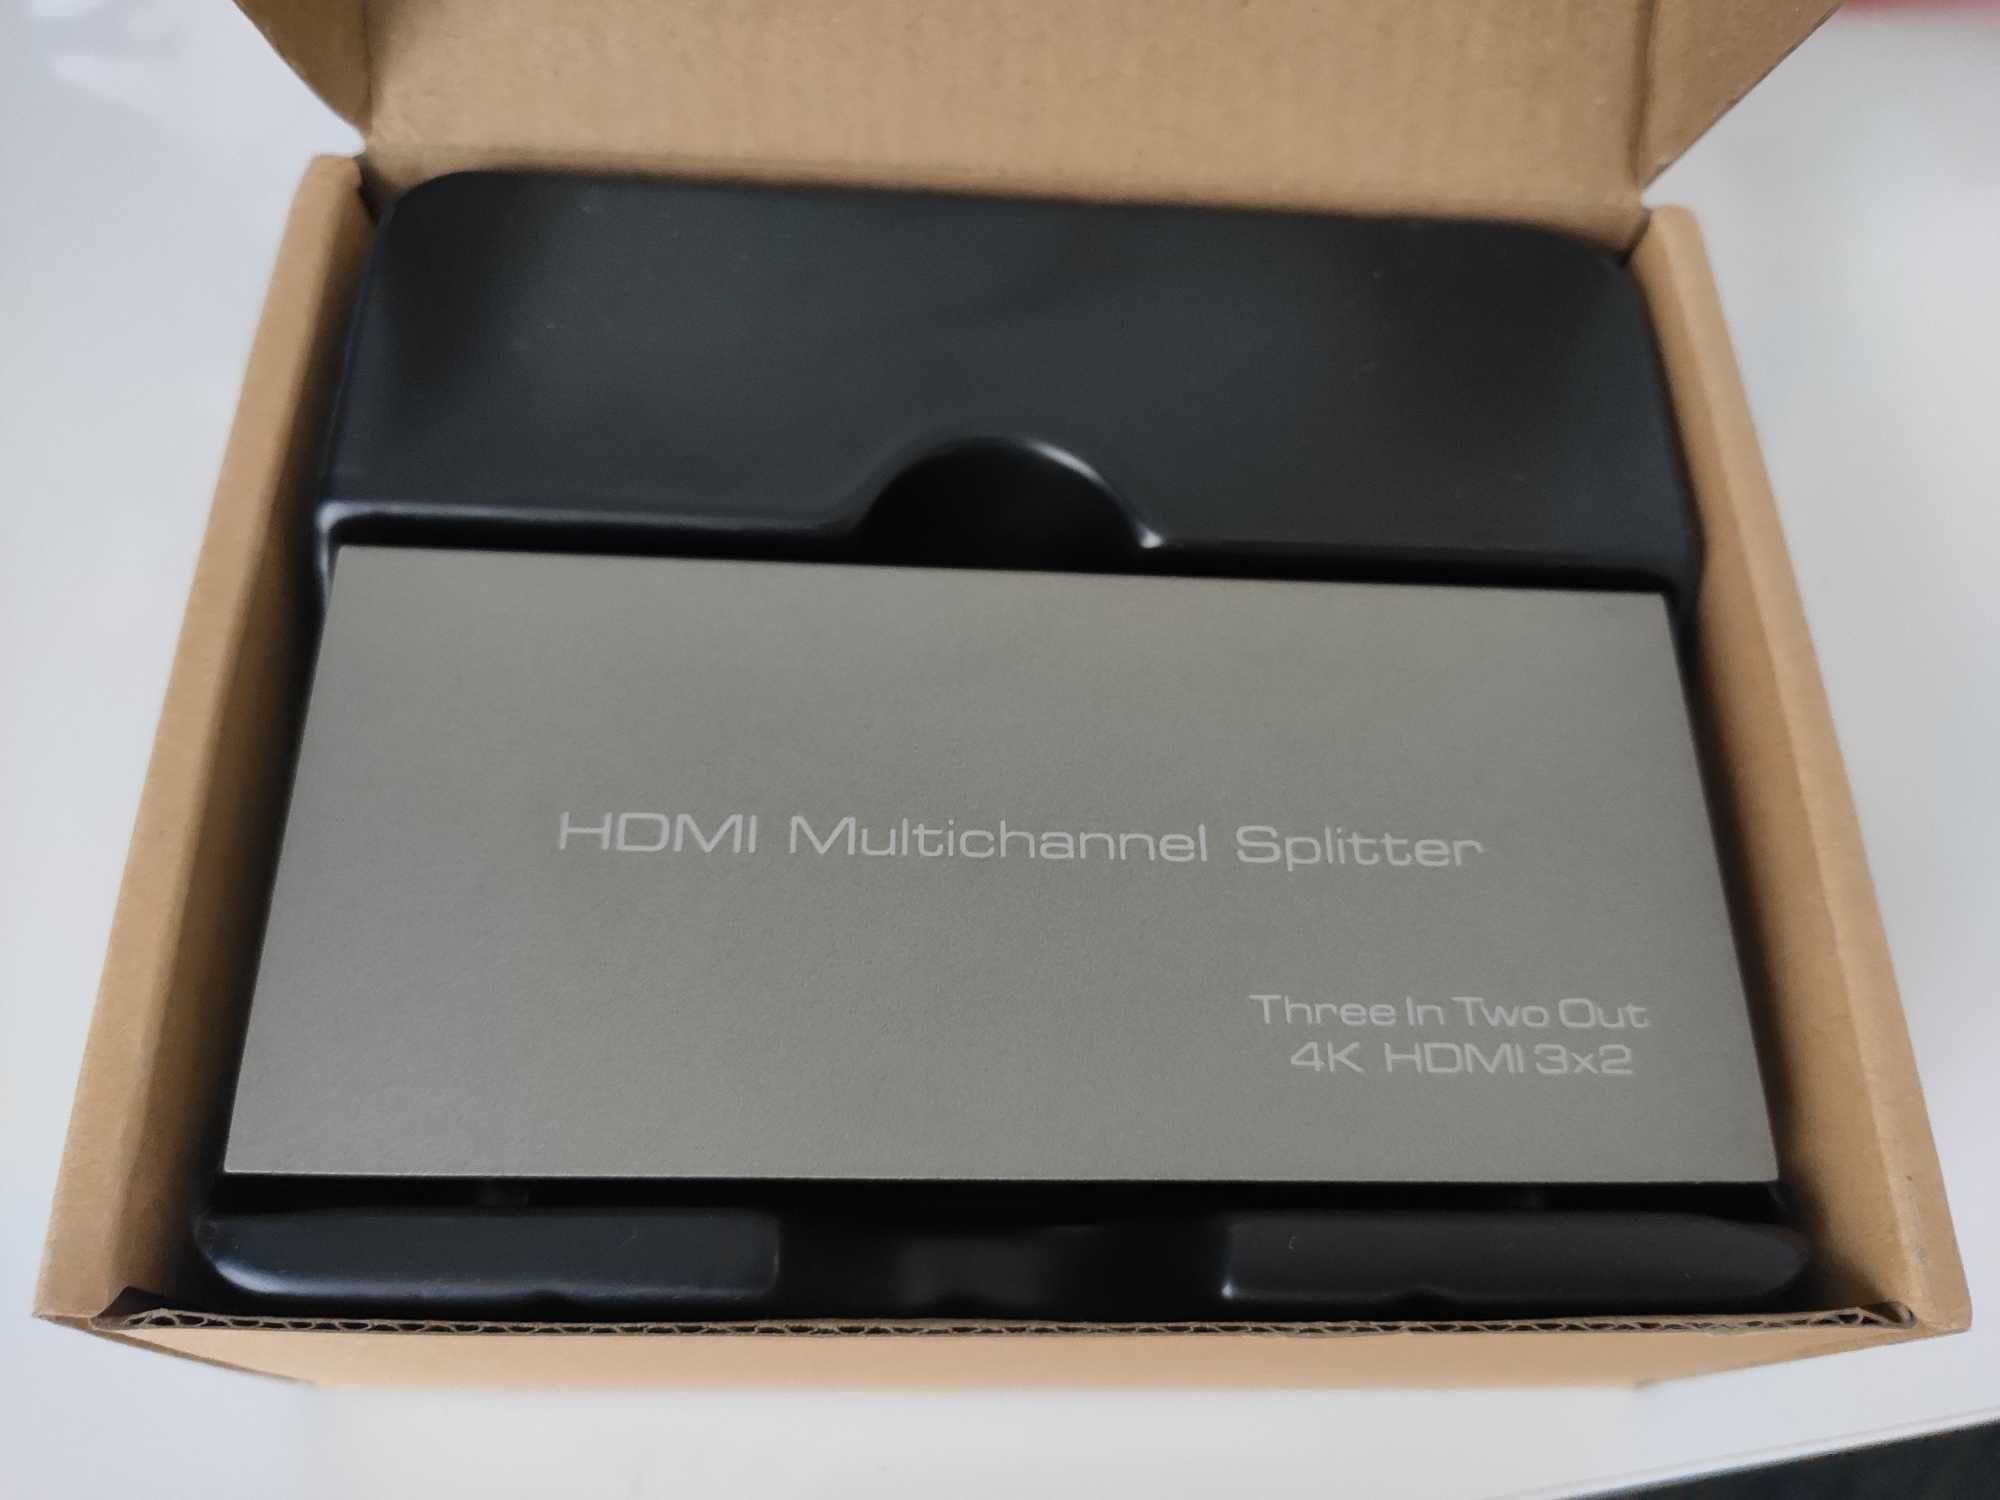 HDMI Multichannel splitter 4k HDMI 3x2